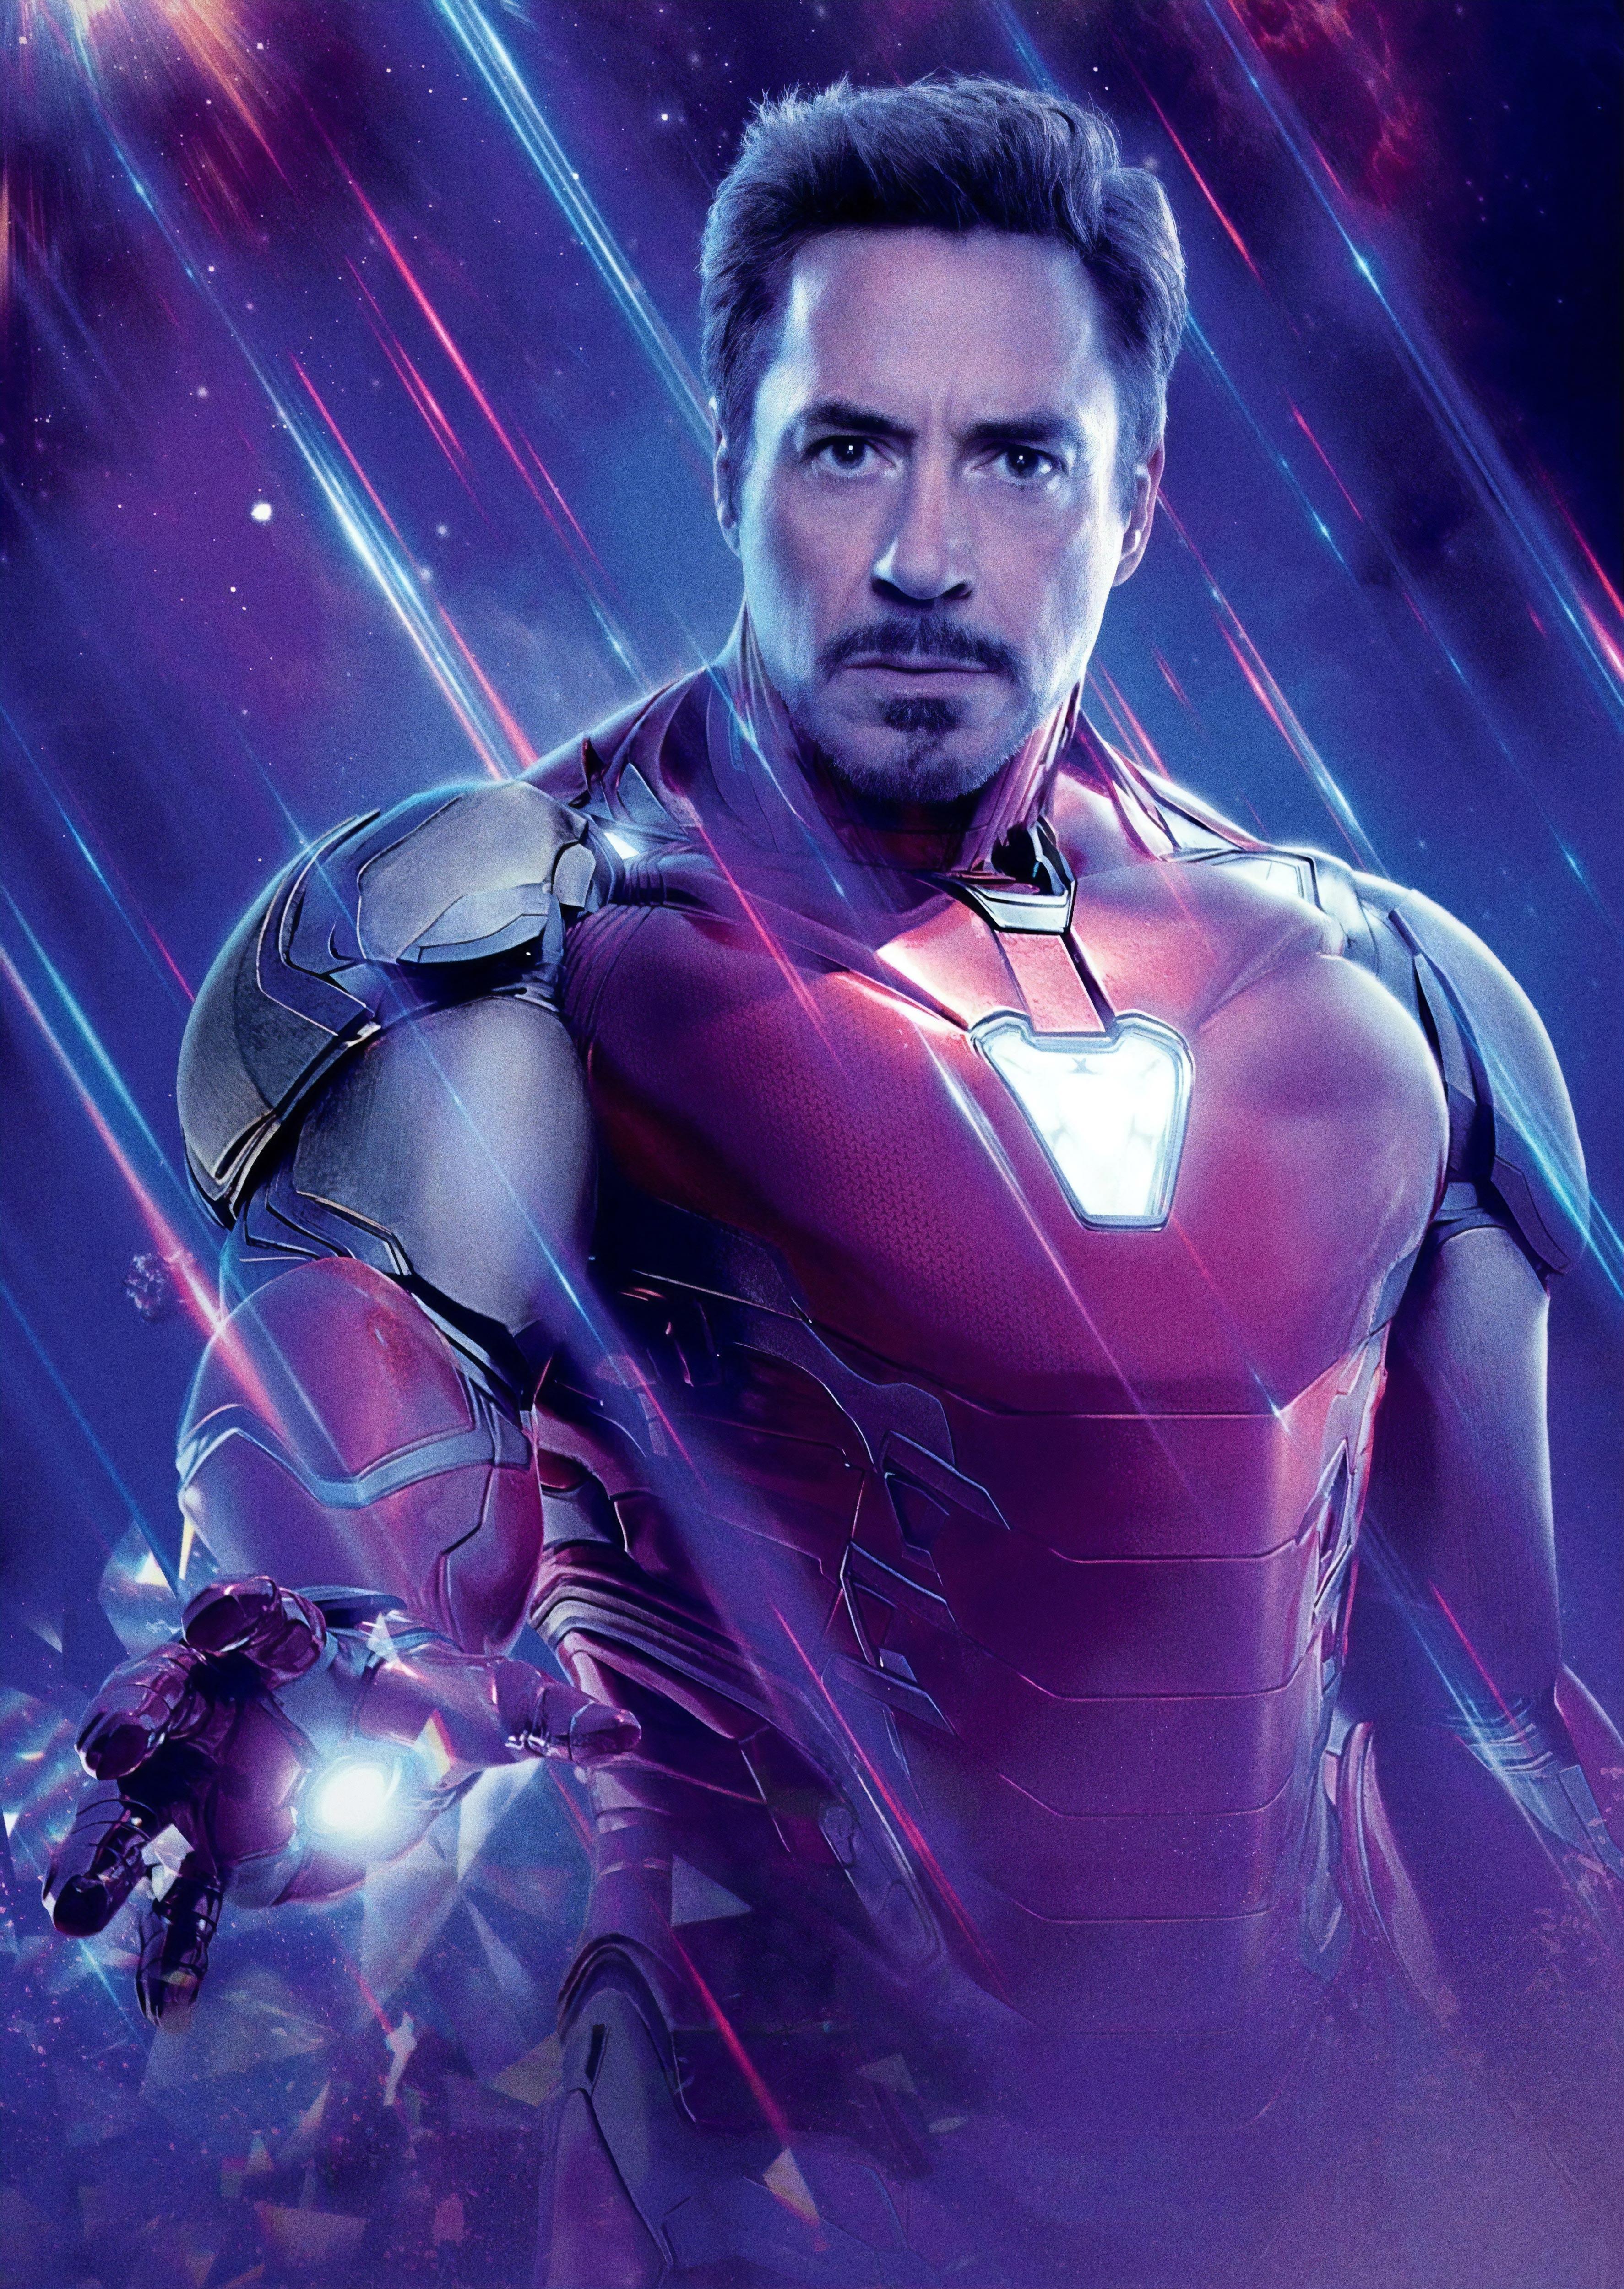 Iron Man in Avengers Endgame Wallpaper, HD Movies 4K